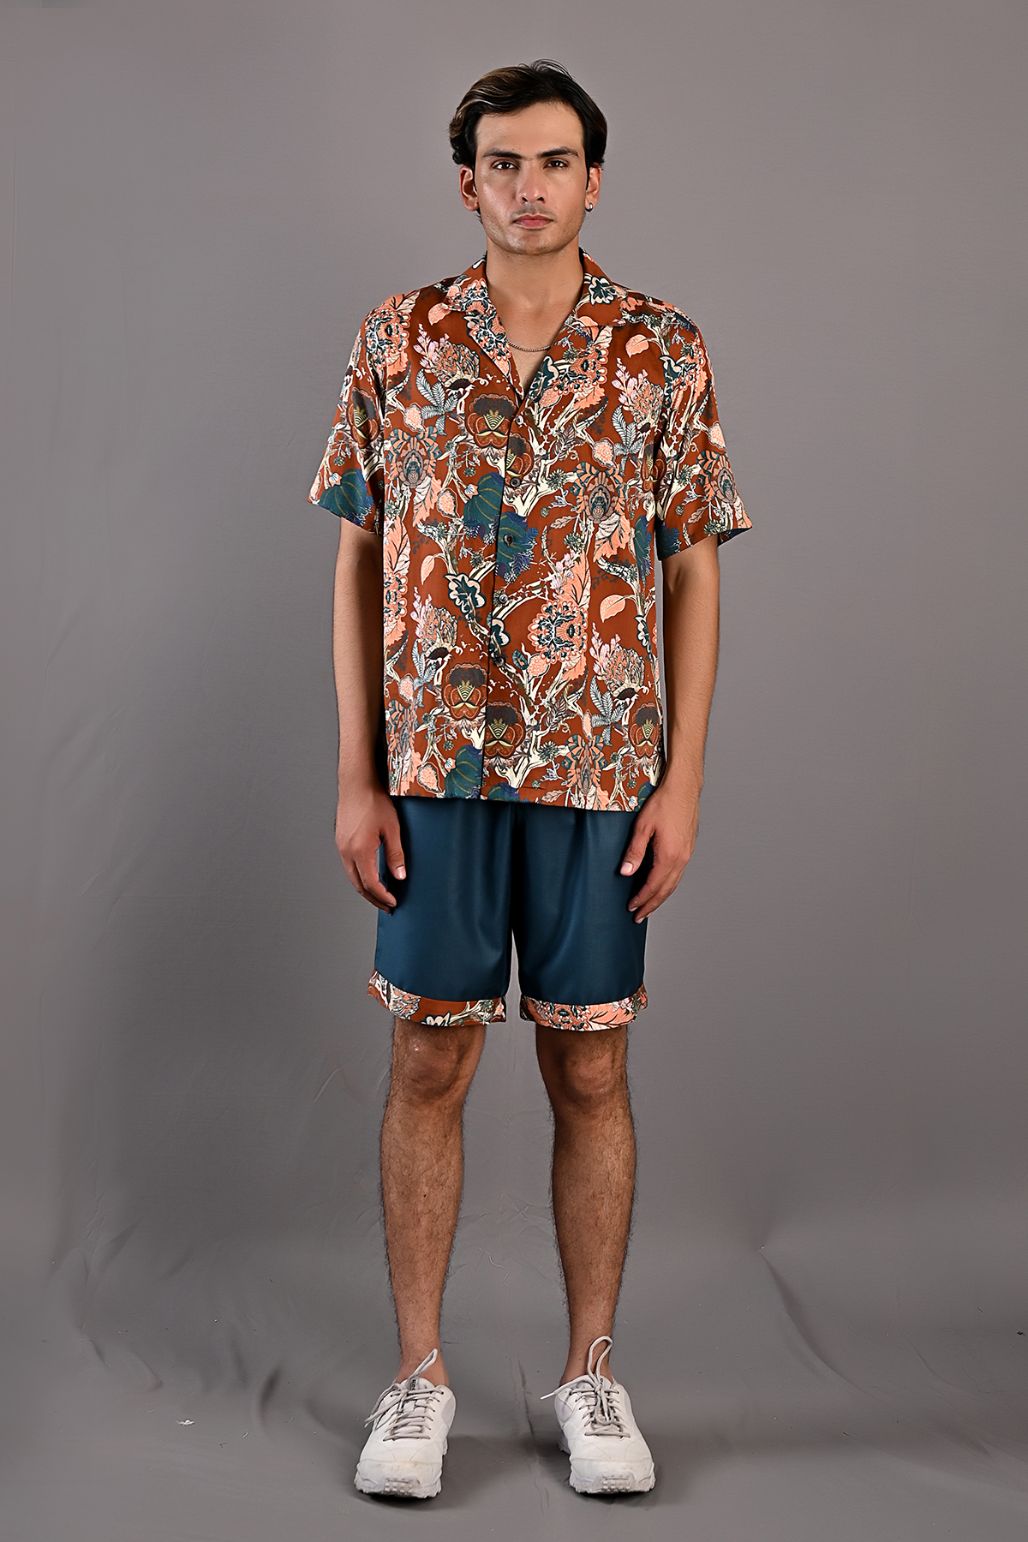 Oak- Maroon & Multi Printed Shirt with Teal Green Shorts Set